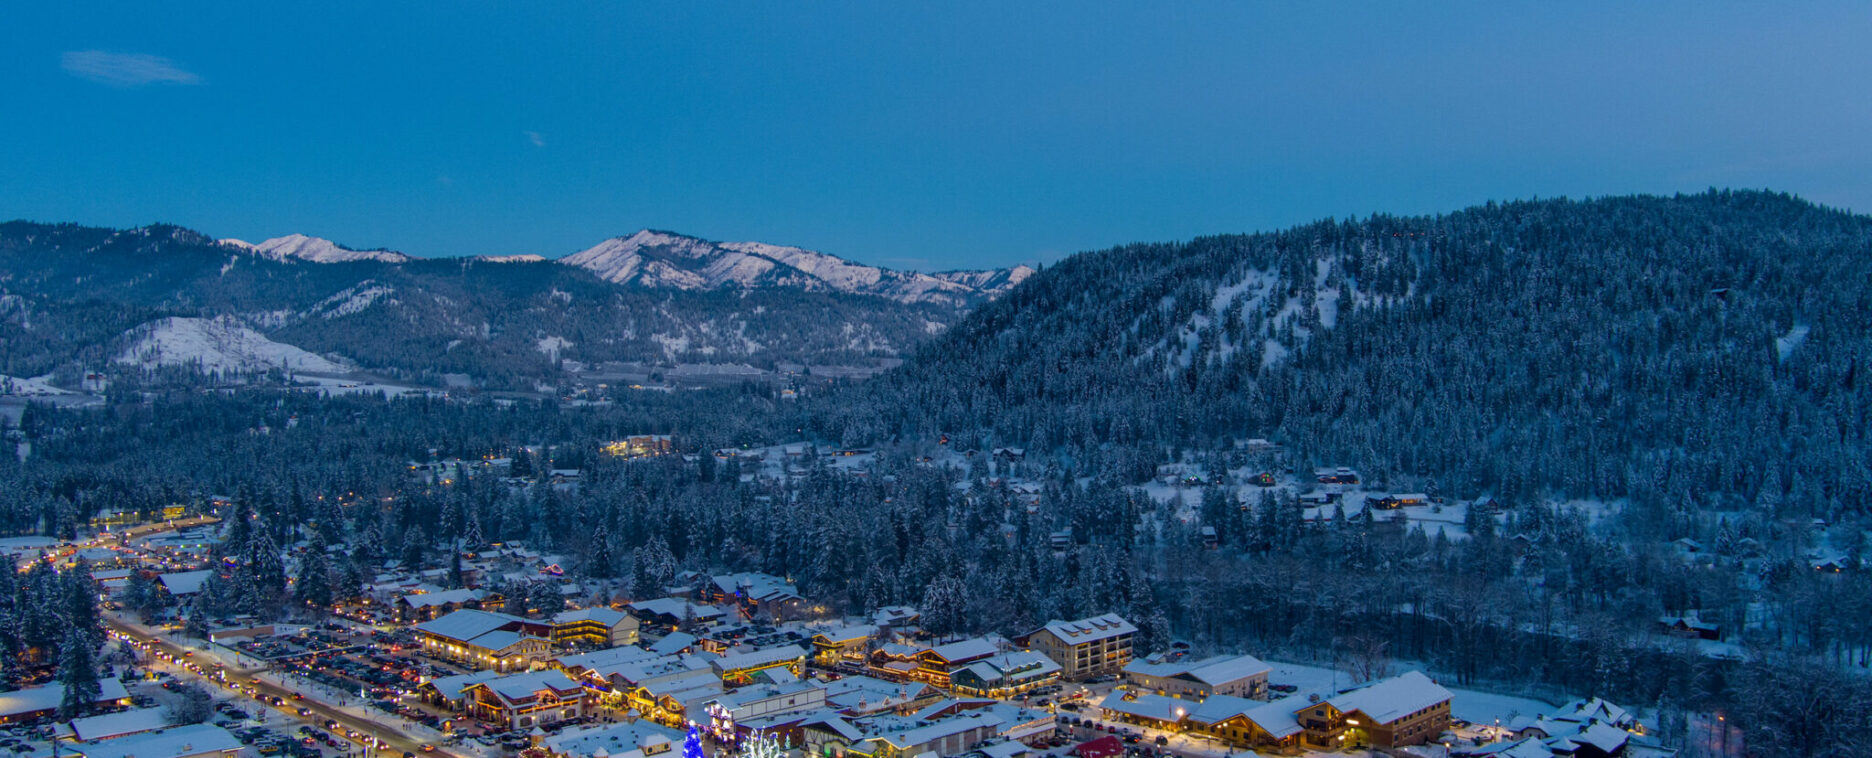 Holiday-lights-Leavenworth-Washington